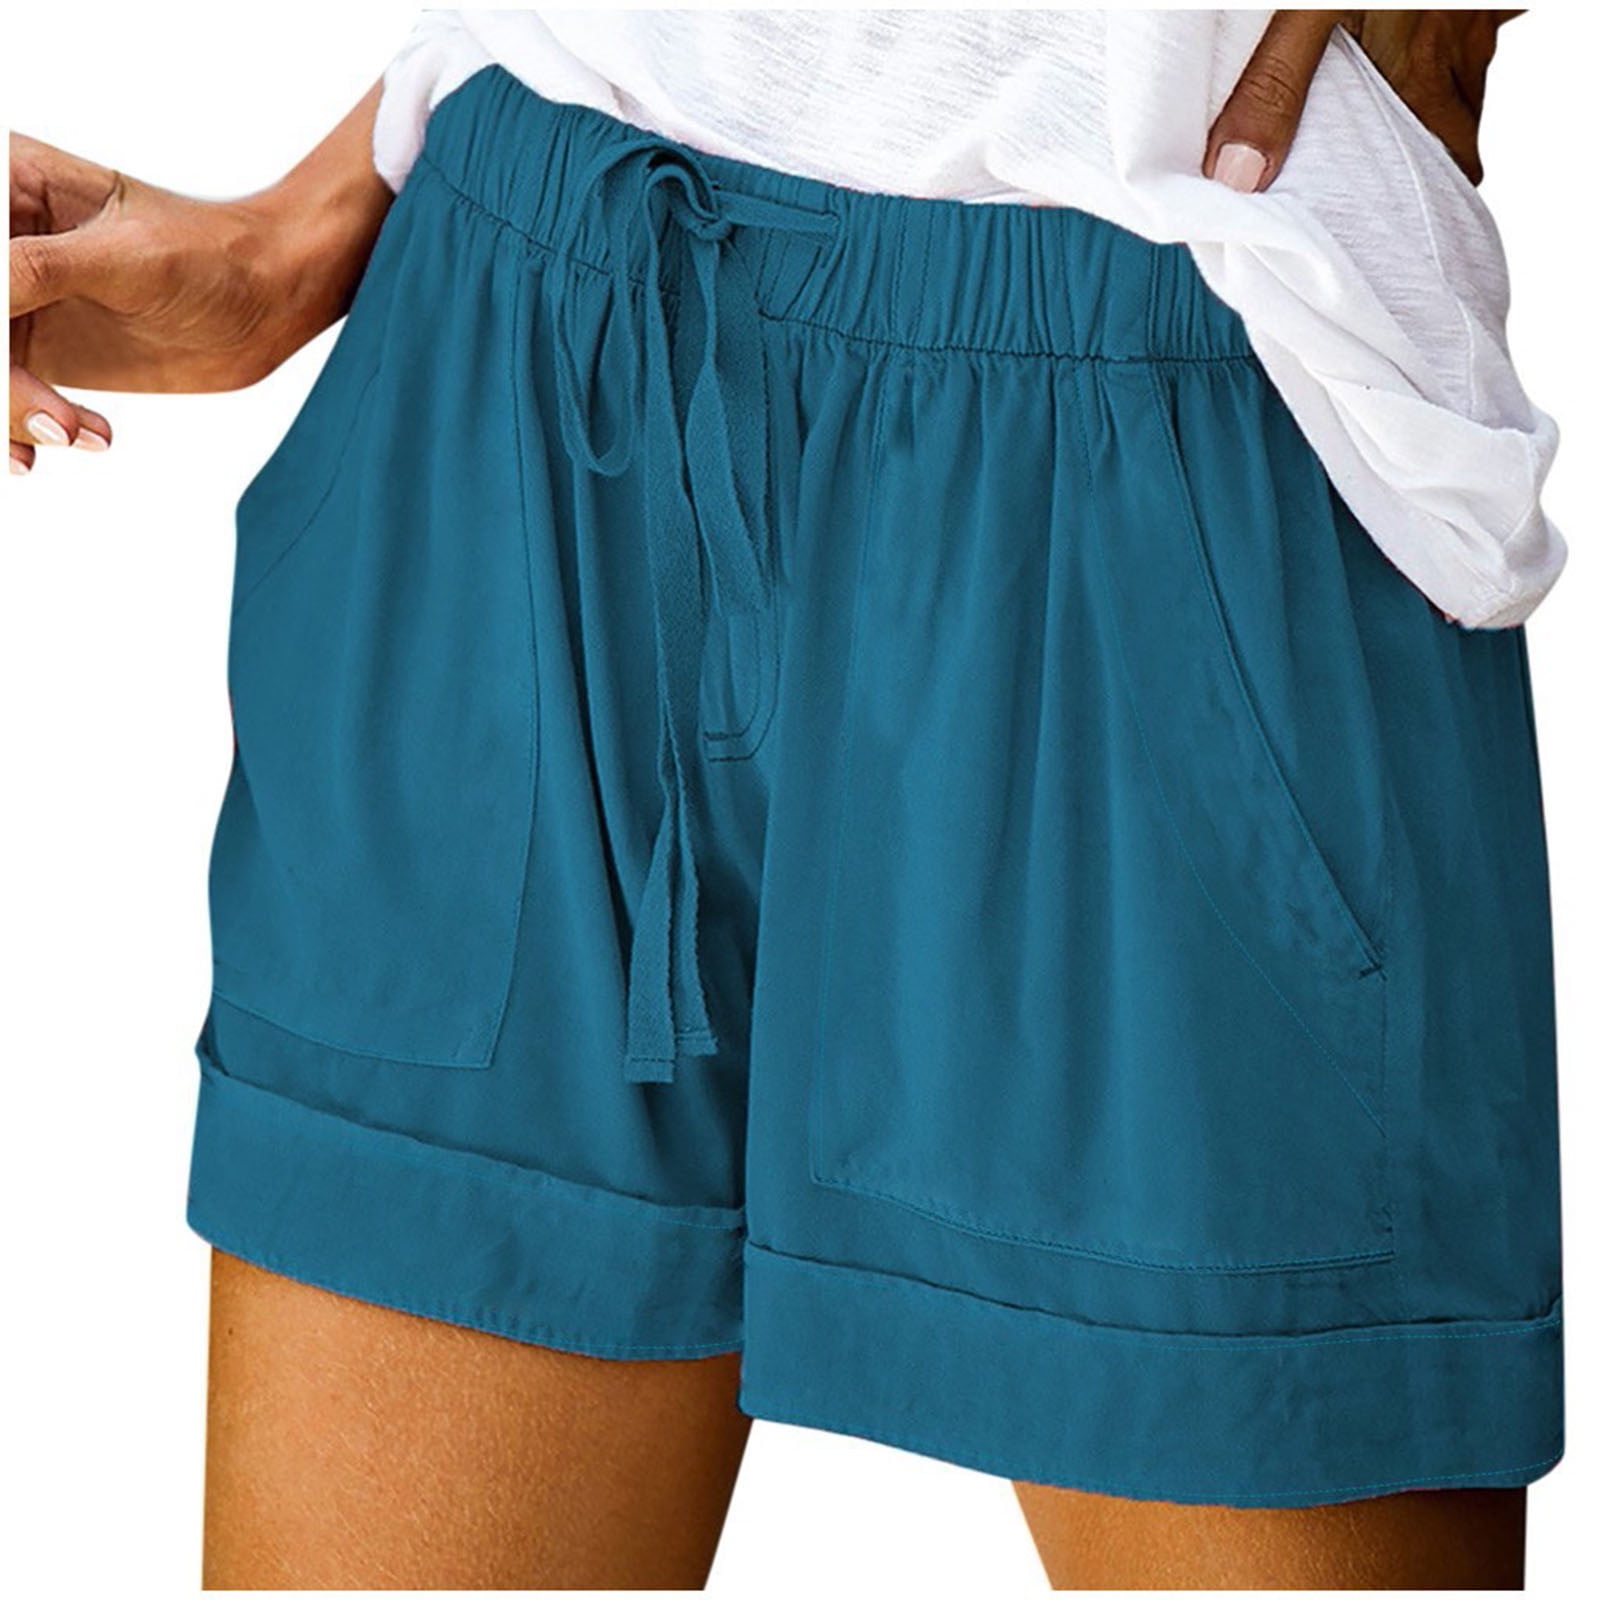 Zkozptok Women's Shorts Plus Size Comfy Drawstring Casual Elastic ...